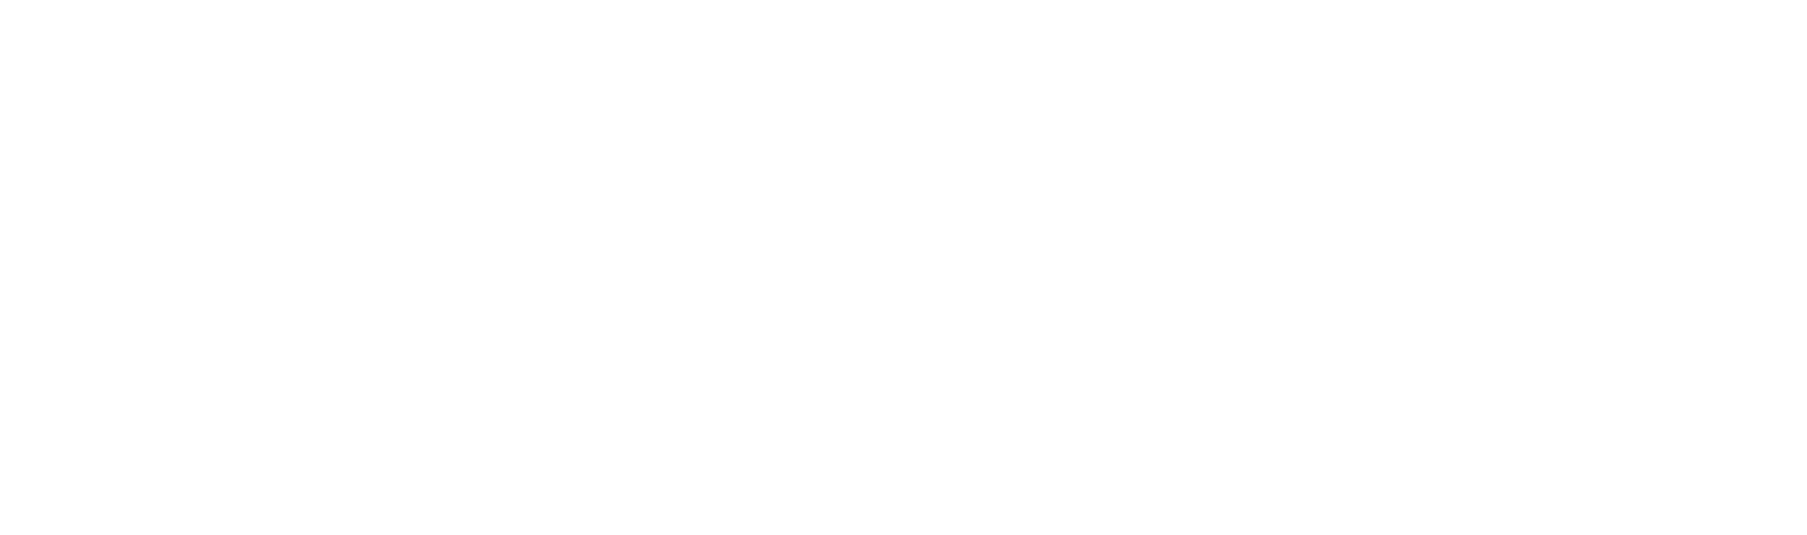 Logo UC3M